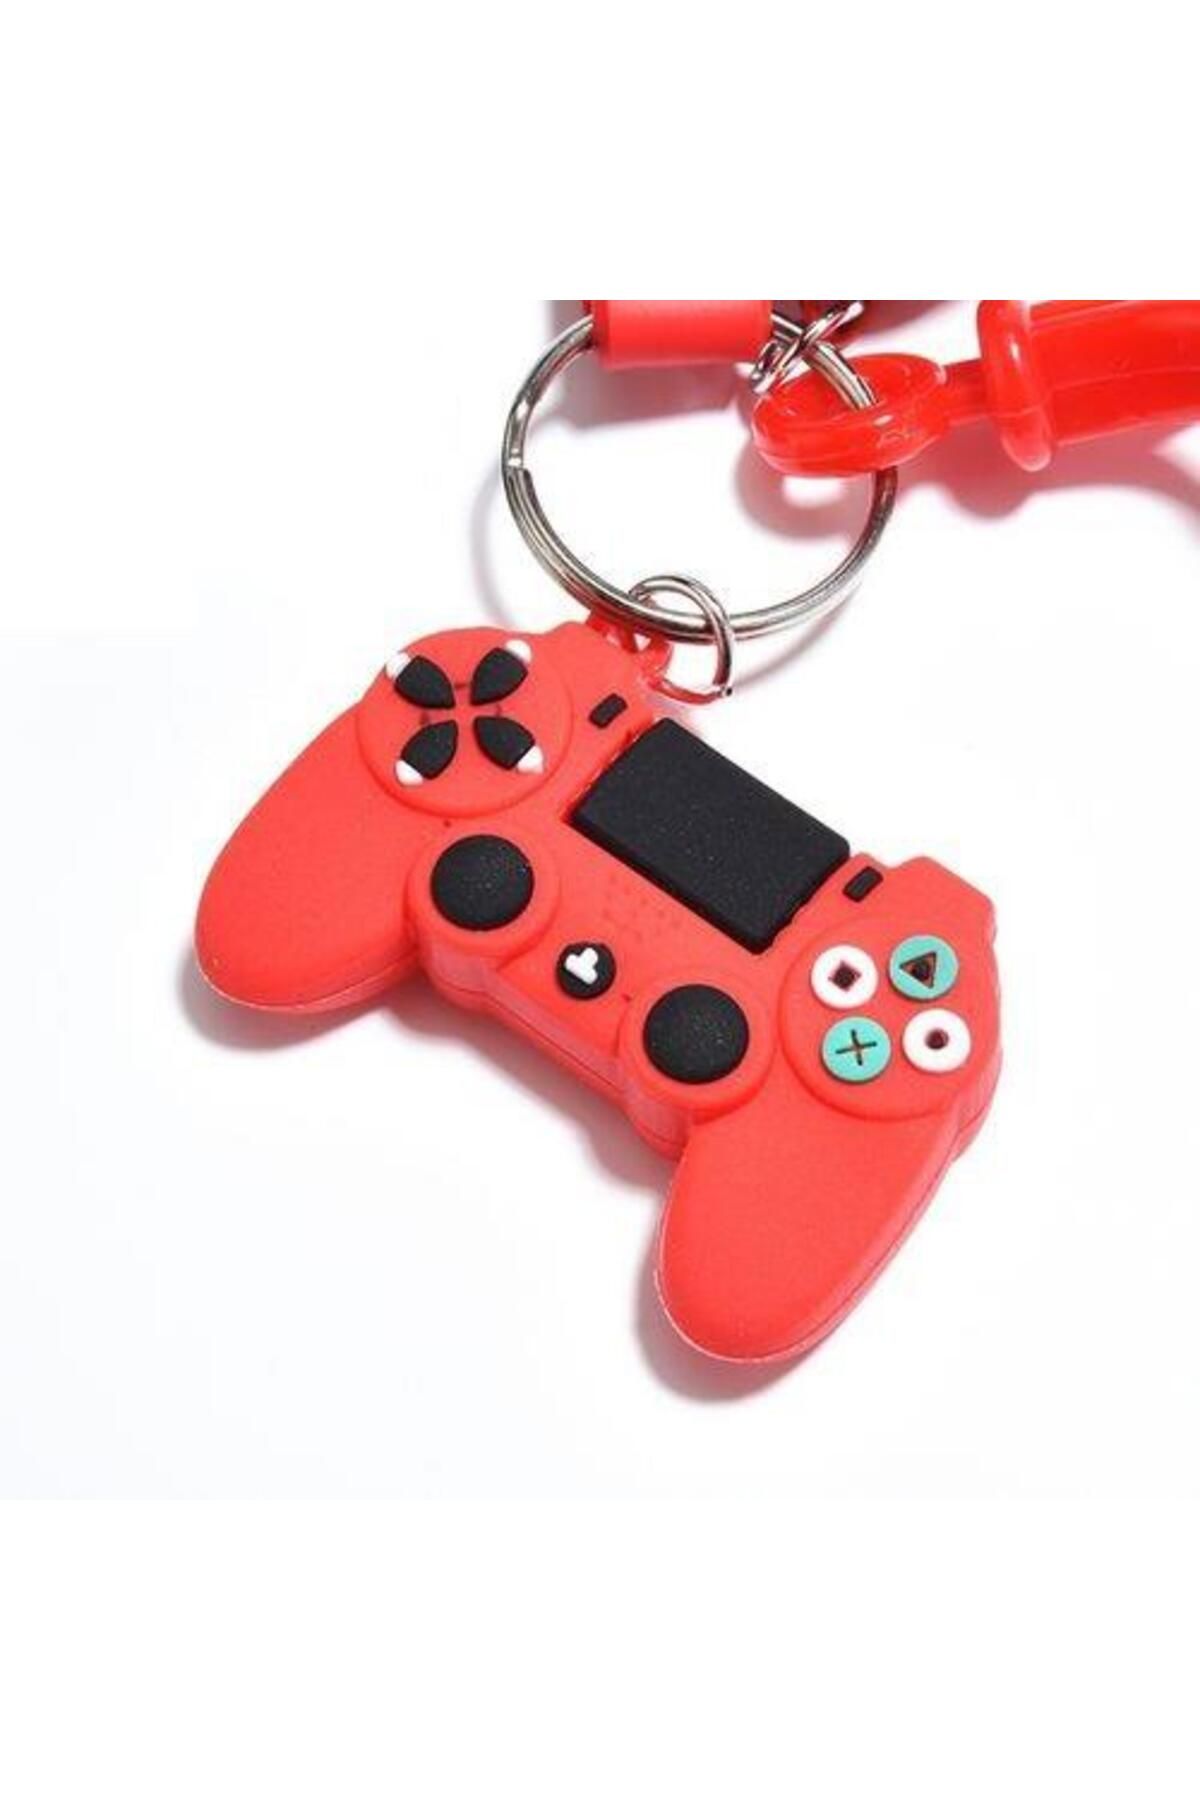 Spelt Ps4 Playstation Dualshock 4 Gamepad Kol Anahtarlık - Kırmızı